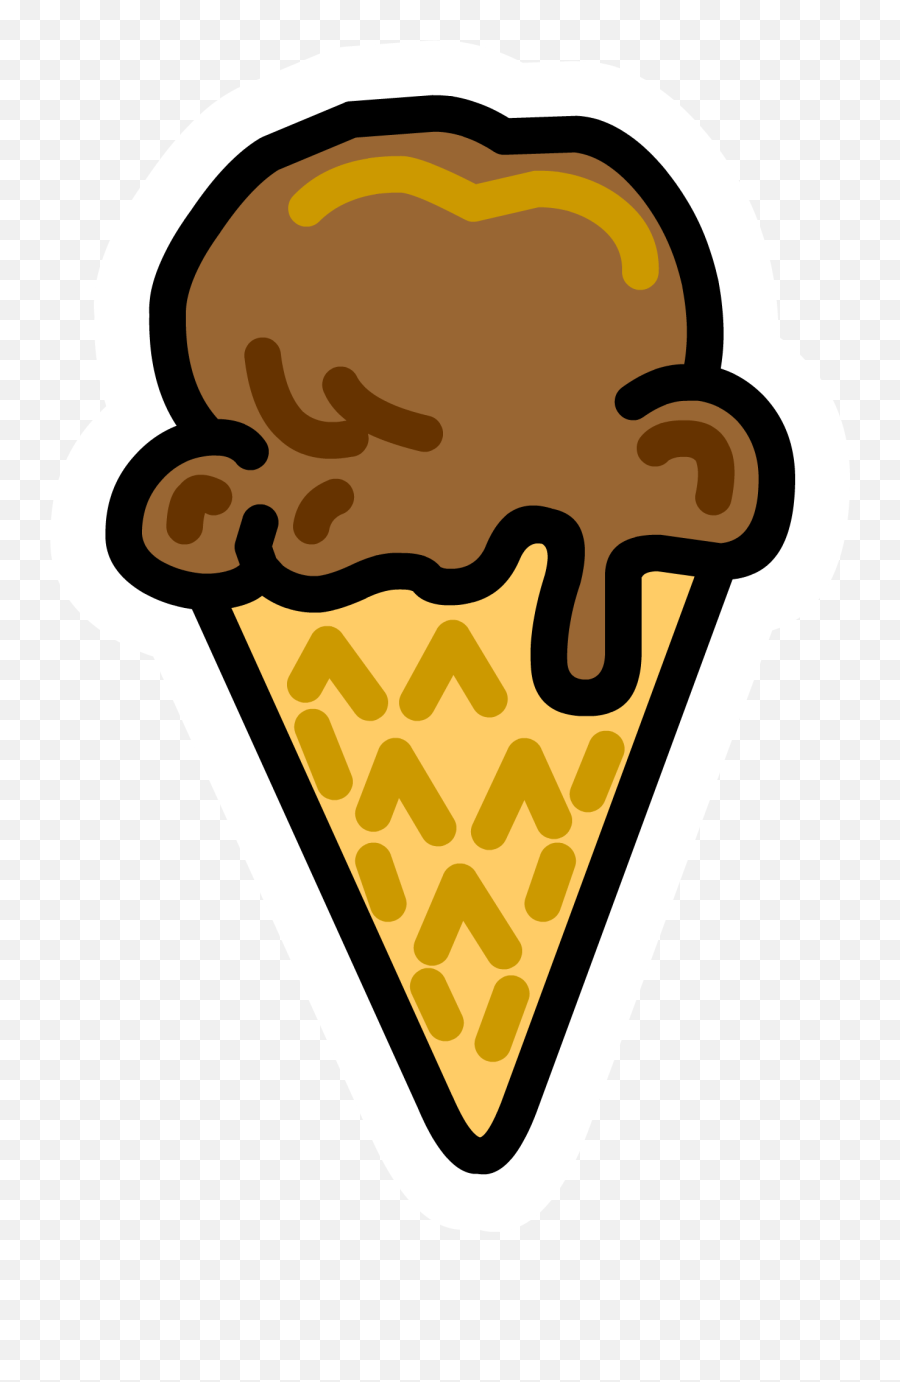 Icecream Cone Pin - Club Penguin Ice Cream Cone Emoji,Ice Cream Cone Emoji